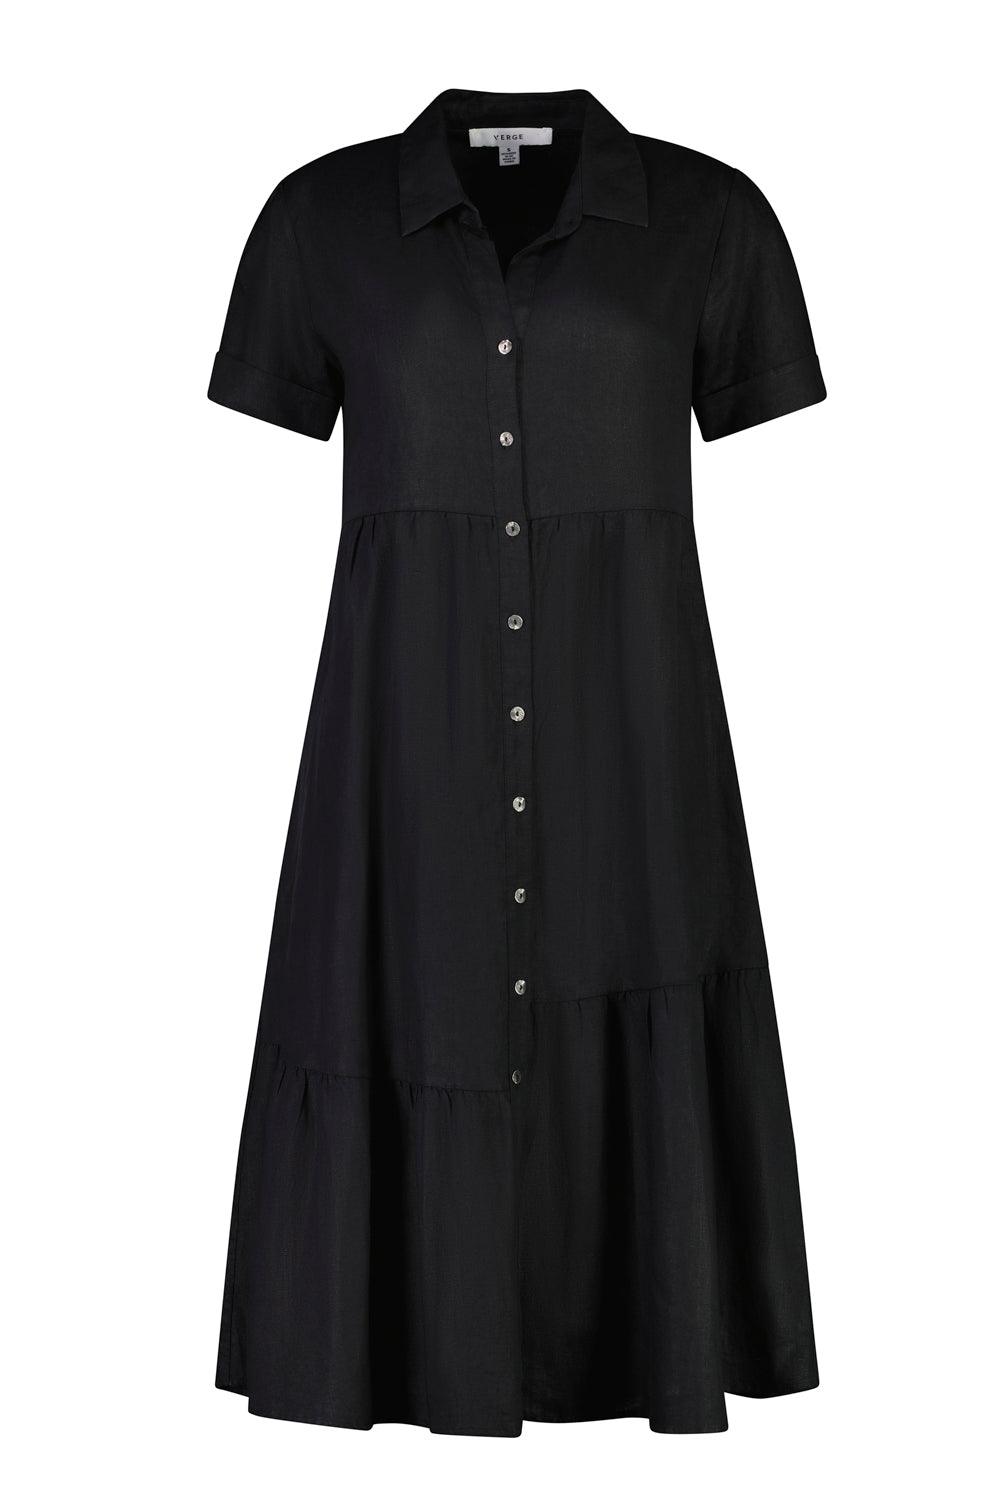 Madrid Linen Dress - Black - Dress VERGE